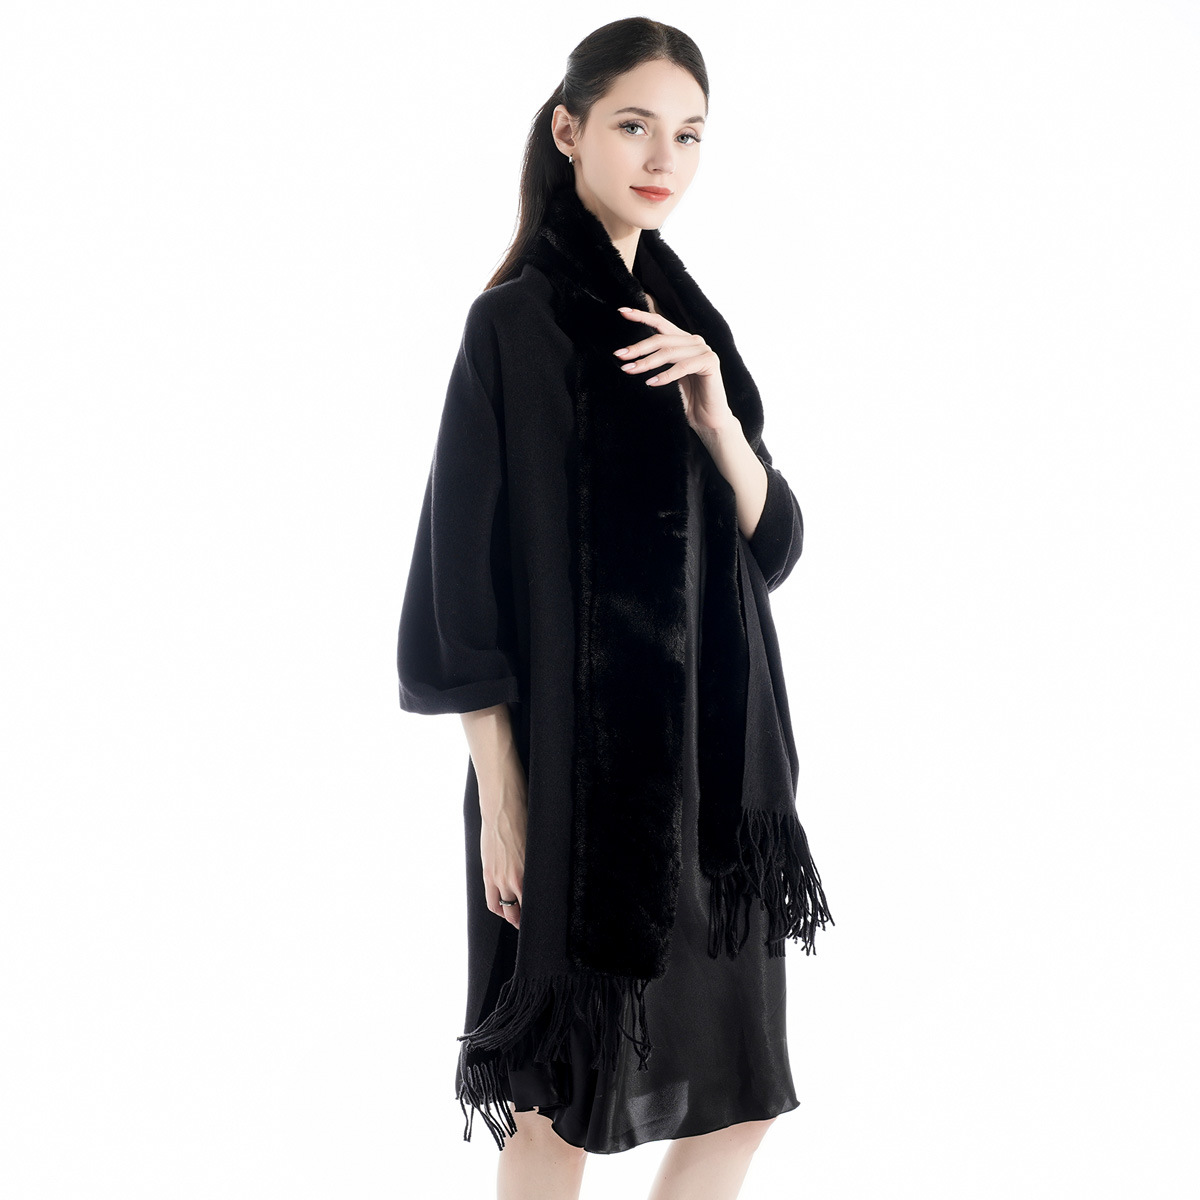 European and American Winter Hot-Selling New Arrival Cashmere-like Fur Collar Shawl Scarf Women's Fashionable High-Grade Warm Dress Shawl